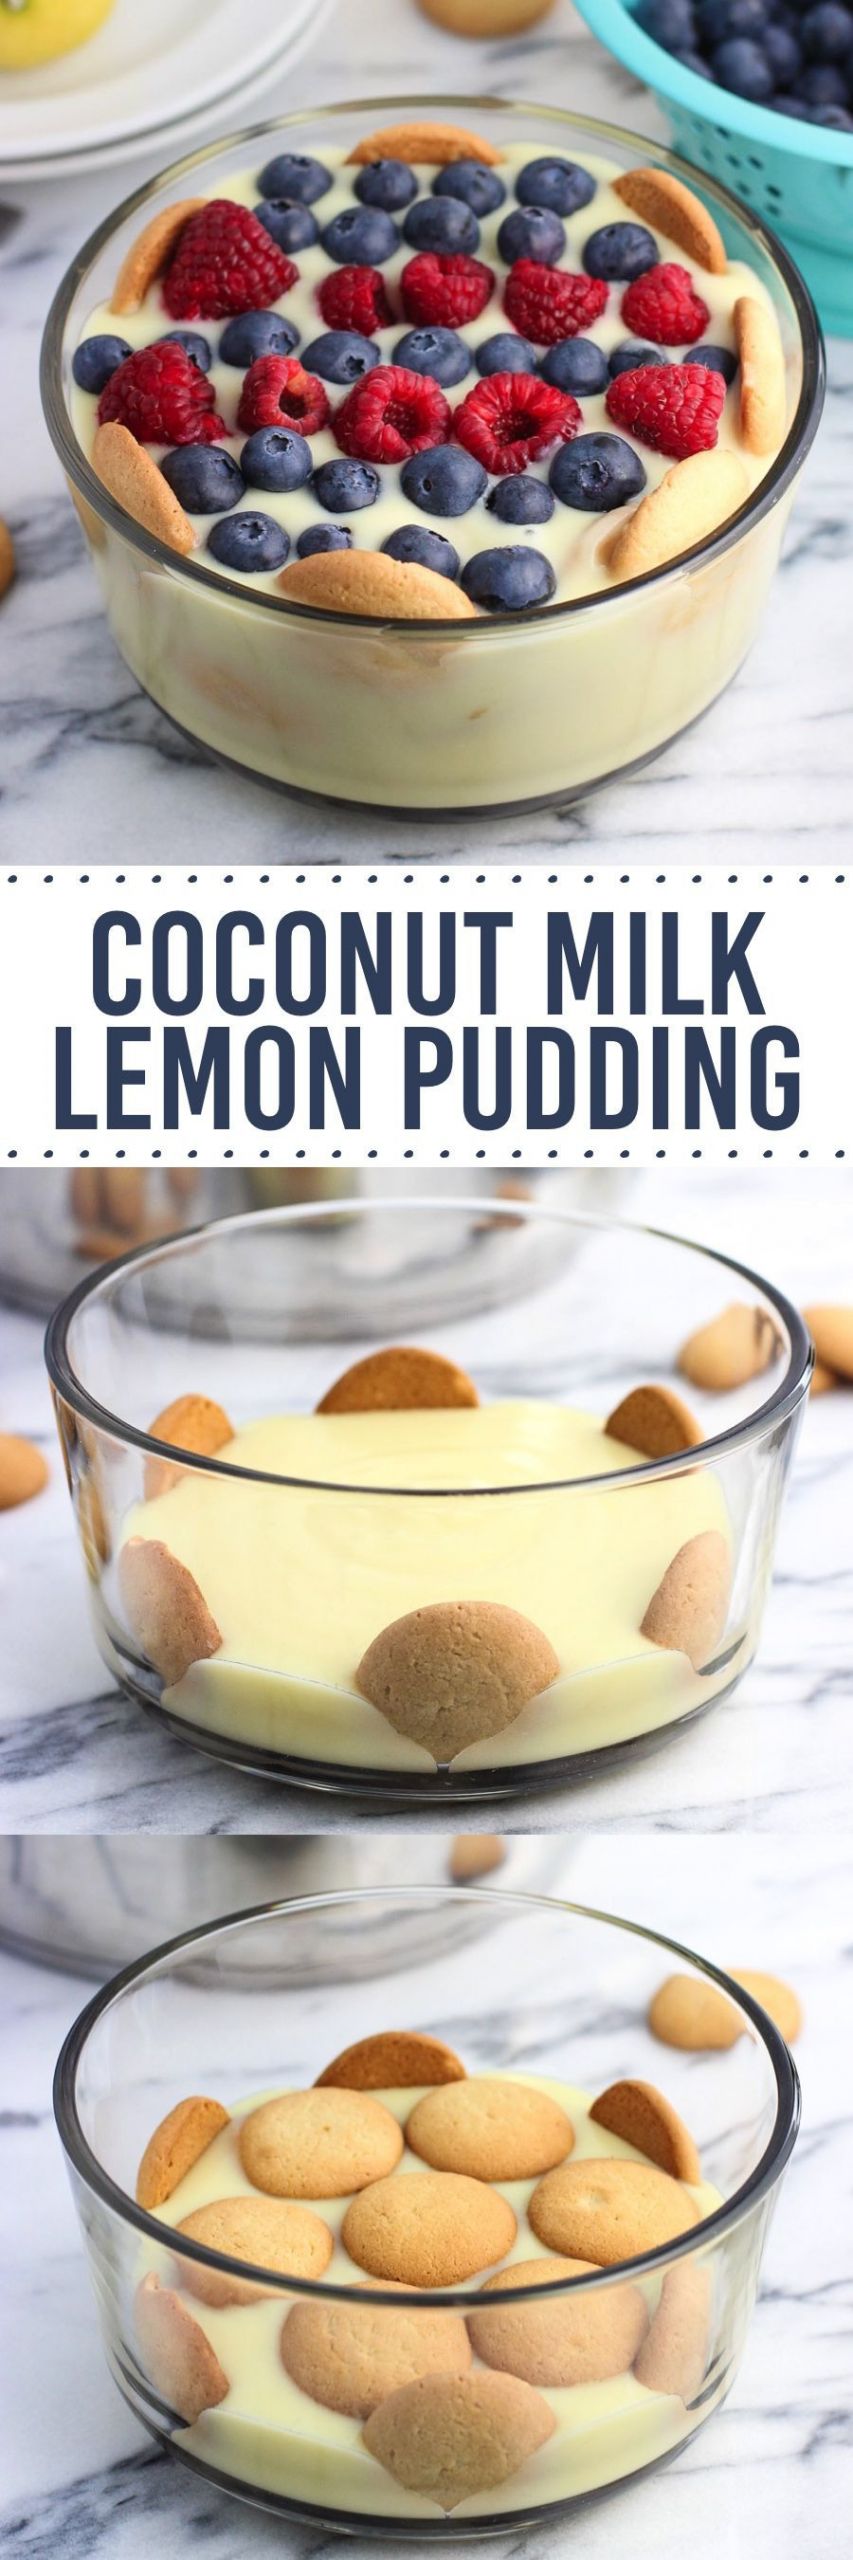 Coconut Milk Desserts
 This coconut milk lemon pudding is creamy tart and just